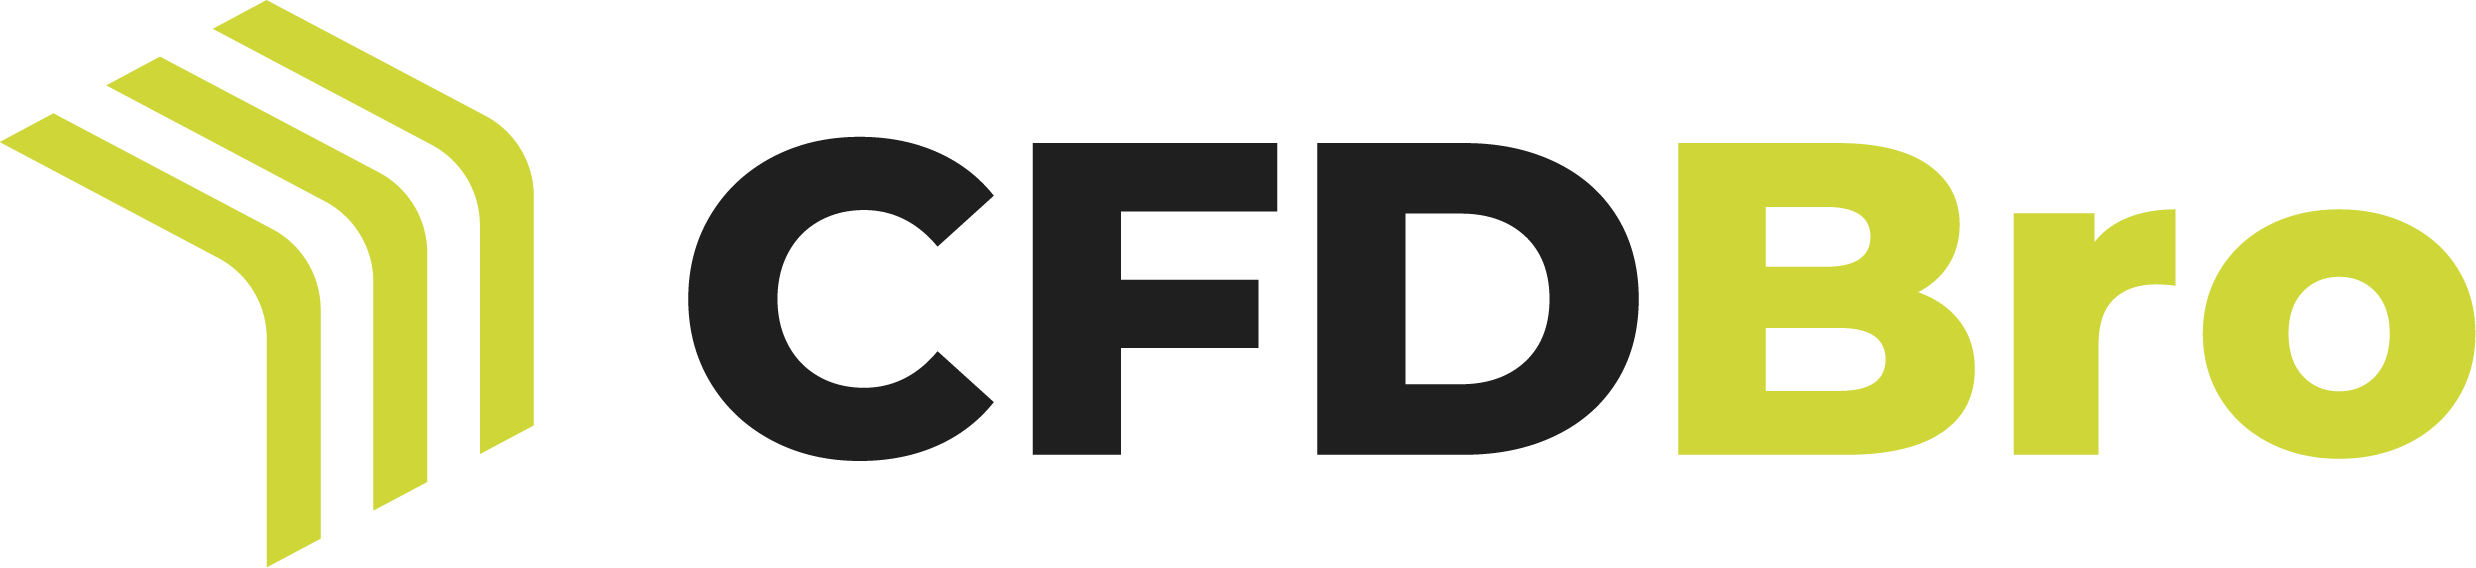 CFDBro logo